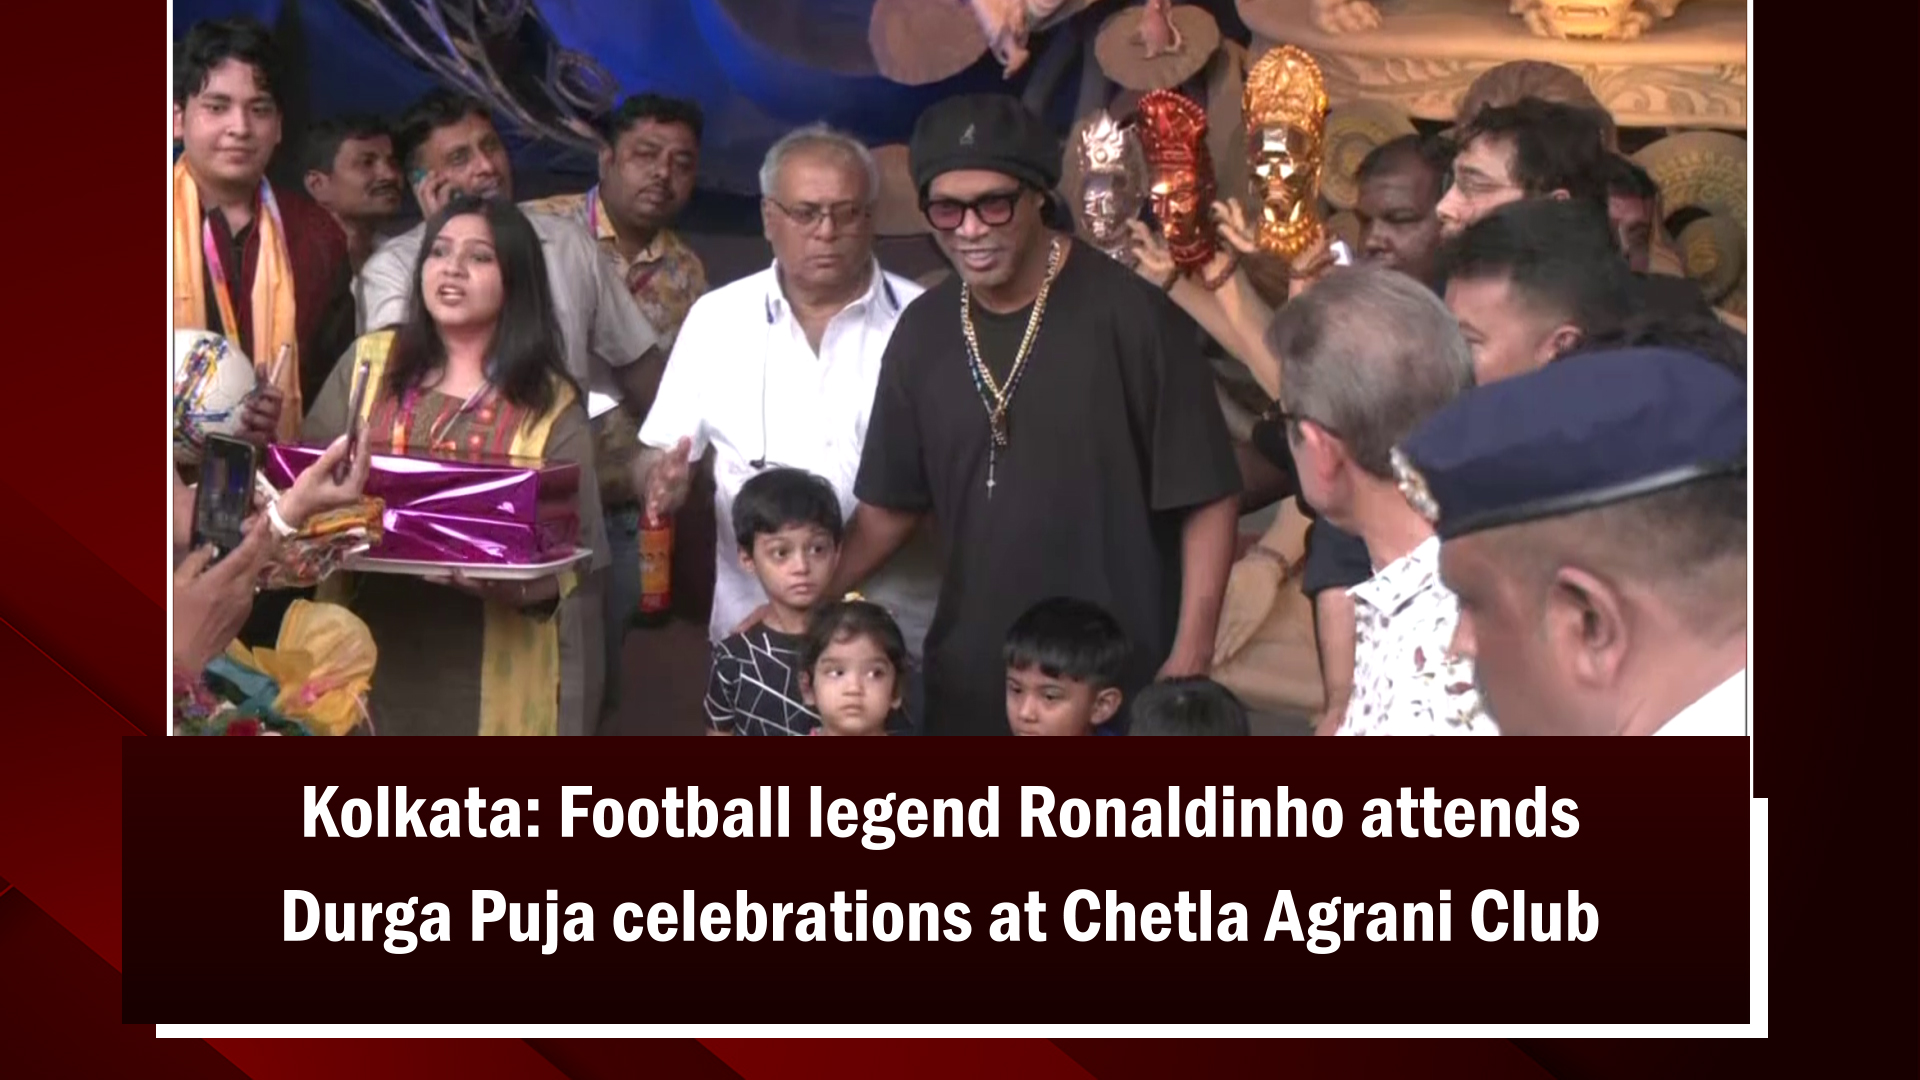 Kolkata: Football legend Ronaldinho attends Durga Puja celebrations at Chetla Agrani Club